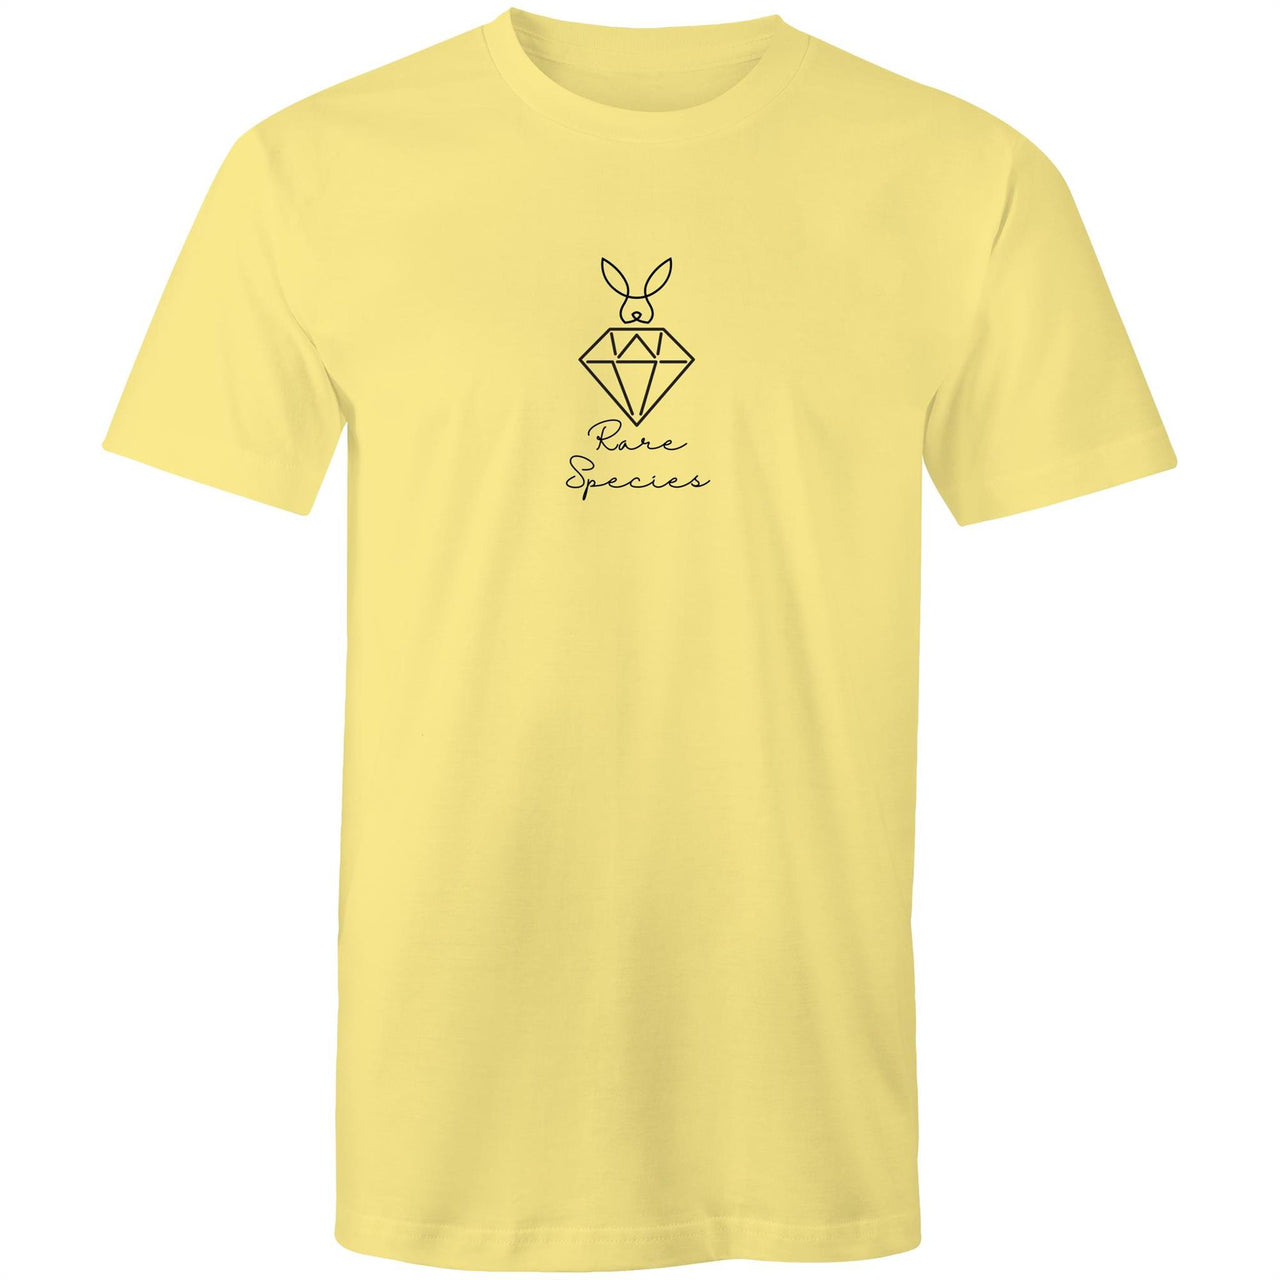 CBF Rare Species Crew T-Shirt yellow by CBF Clothing